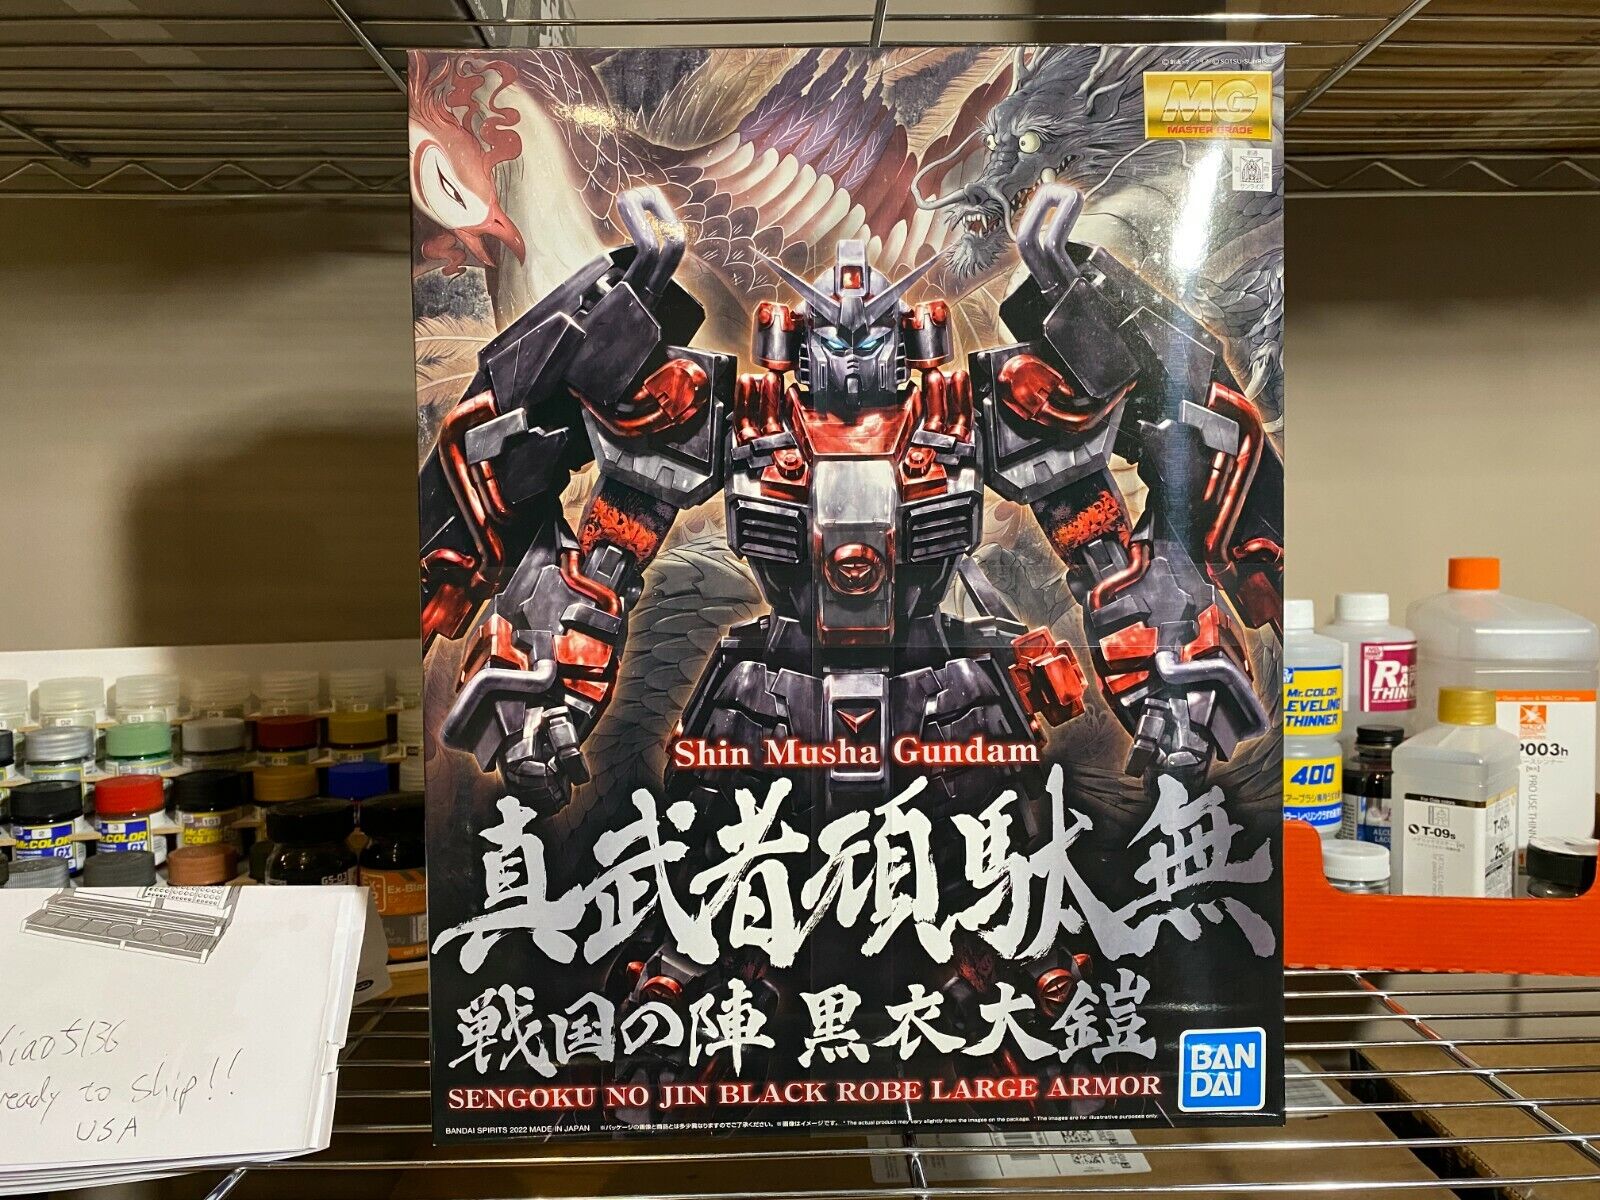 Bandai MG 1/100 SHIN MUSHA GUNDAM Sengoku no jin Black Large Armor USA In-Hand